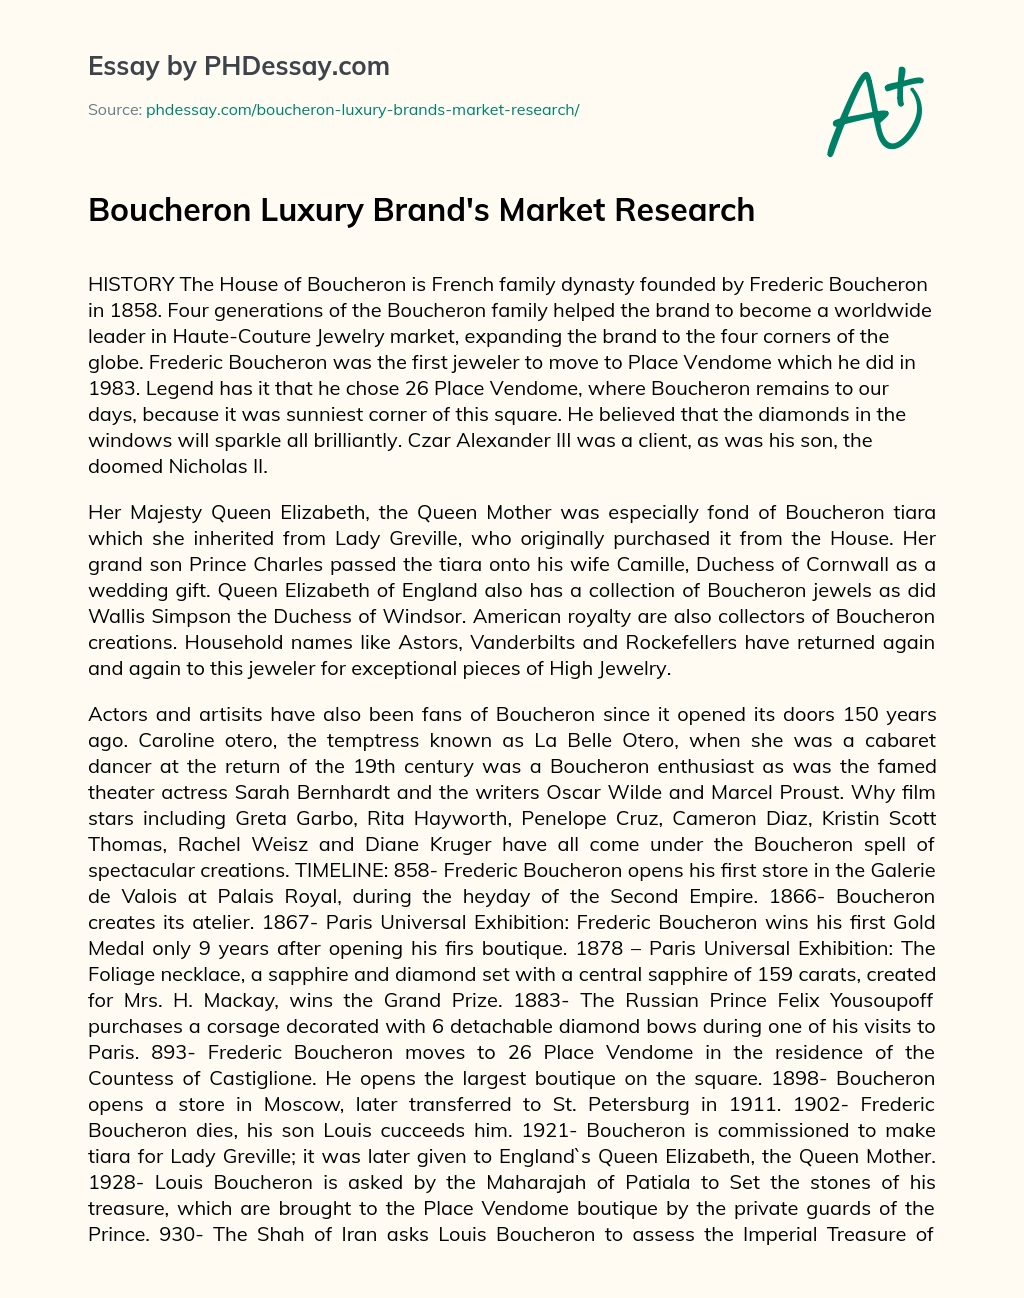 Boucheron Luxury Brand’s Market Research essay